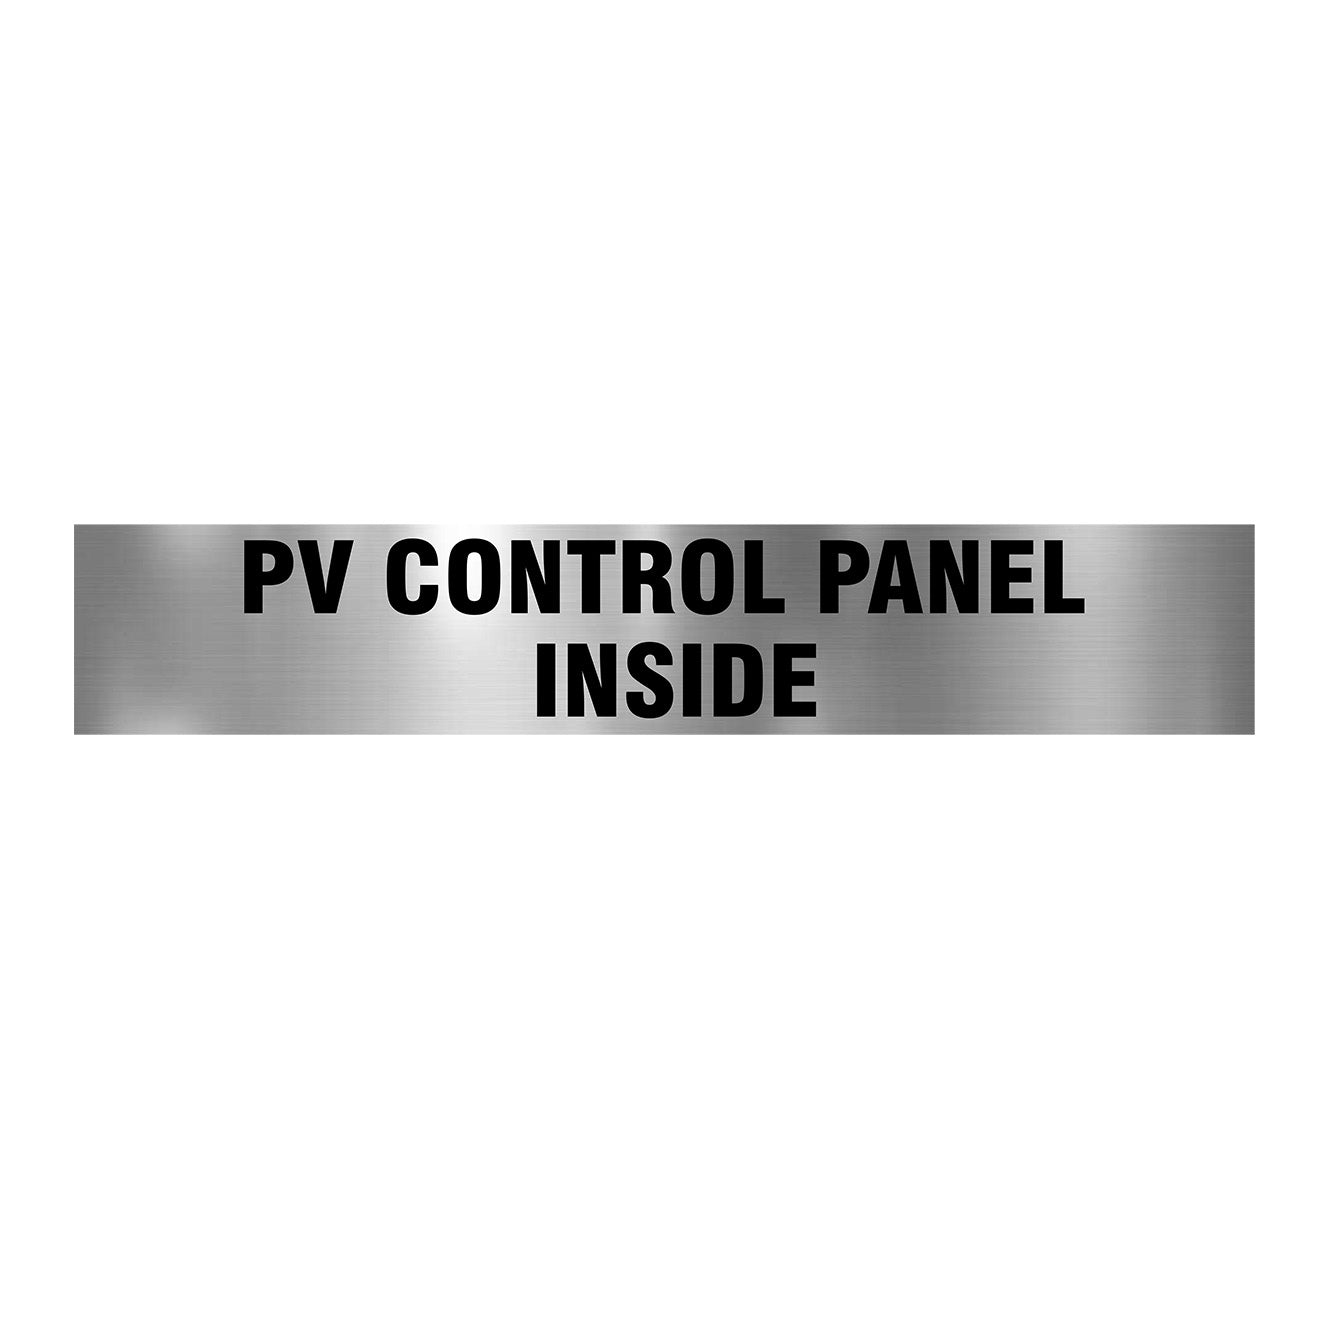 PVC CONTROL PANEL INSIDE SIGN